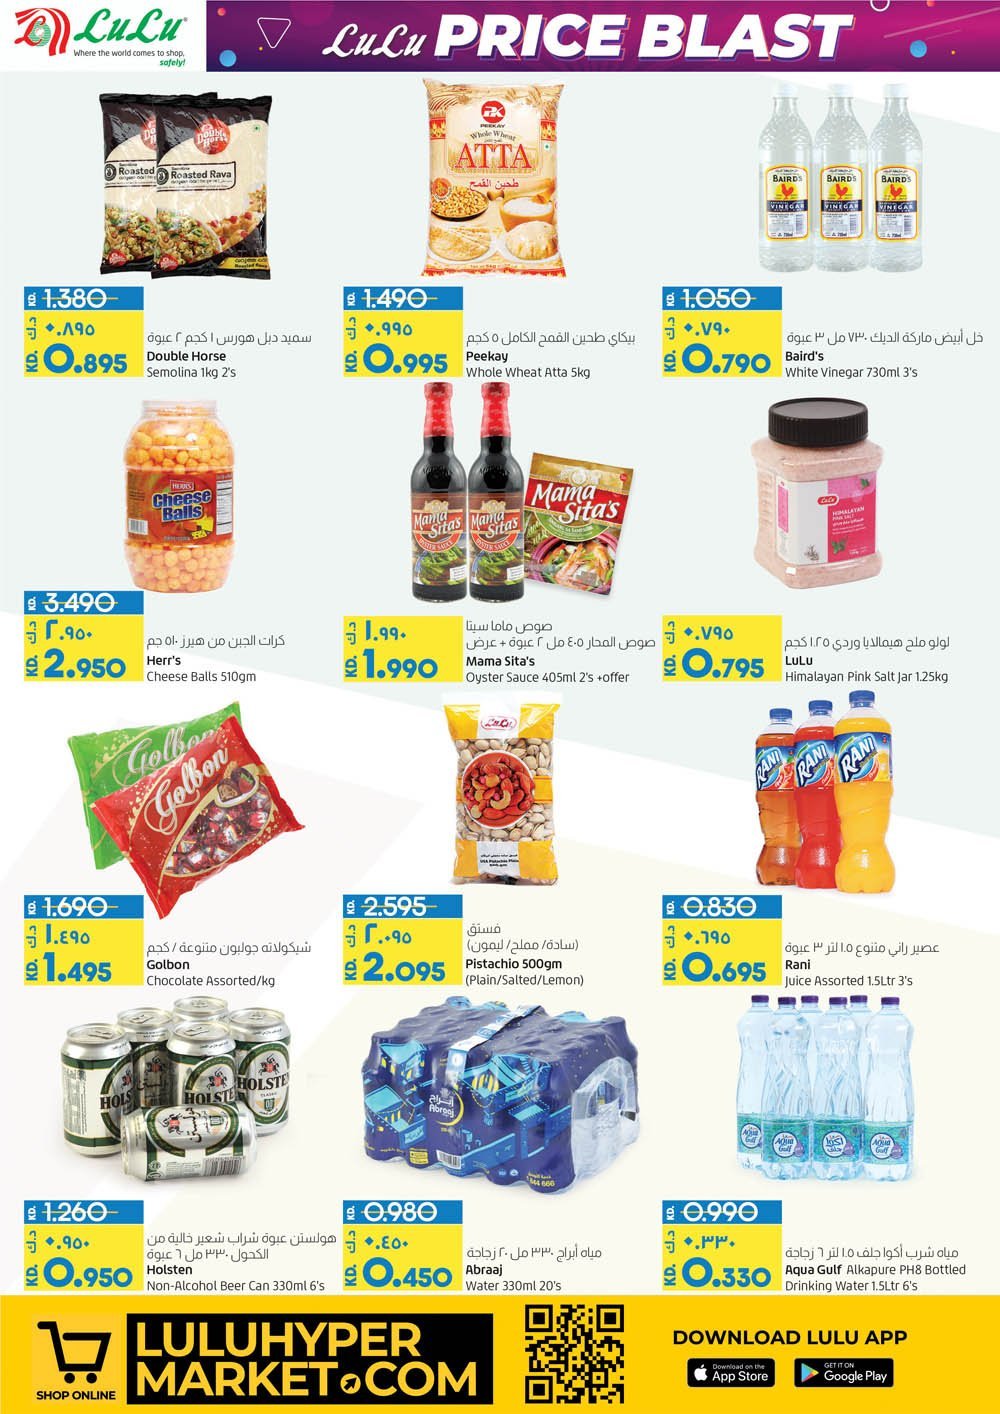 Lulu Hypermarket Price Blast starts till 24th May, iiQ8 offers 3